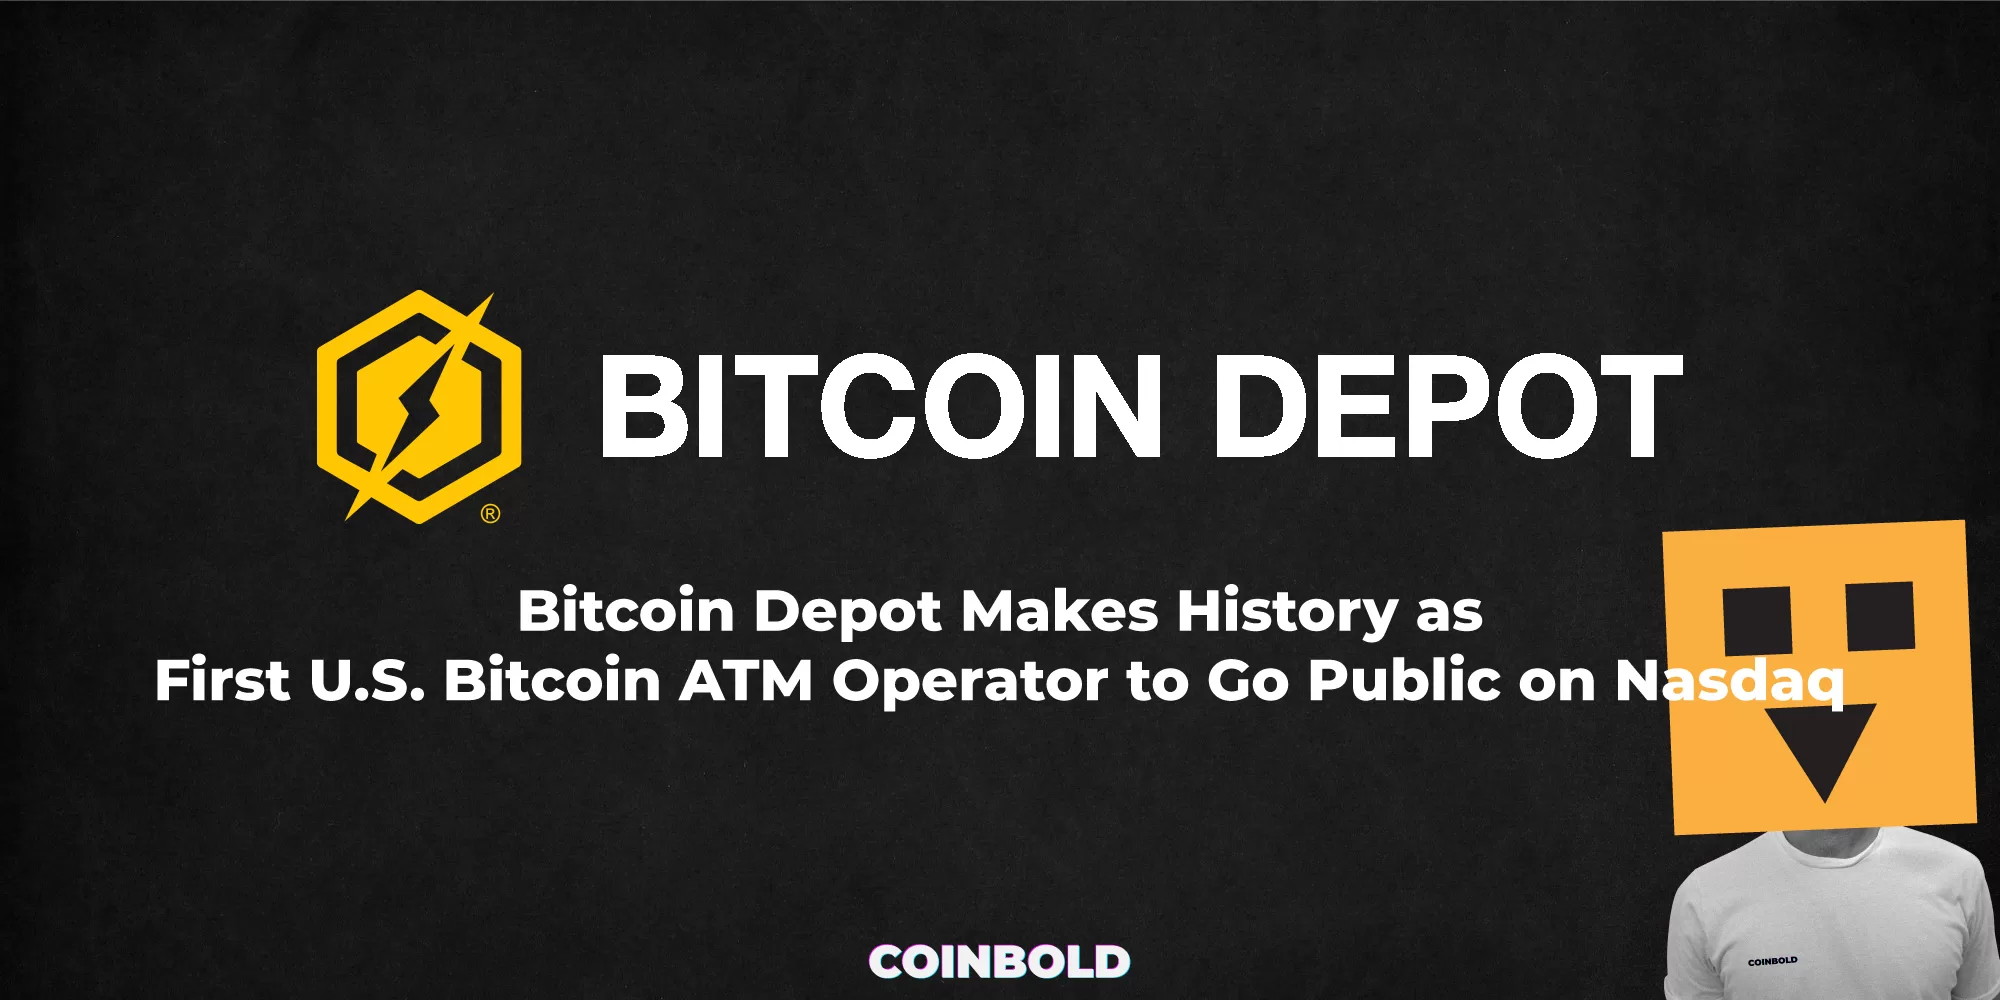 Bitcoin Depot Makes History as First U.S. Bitcoin ATM Operator to Go Public on Nasdaq